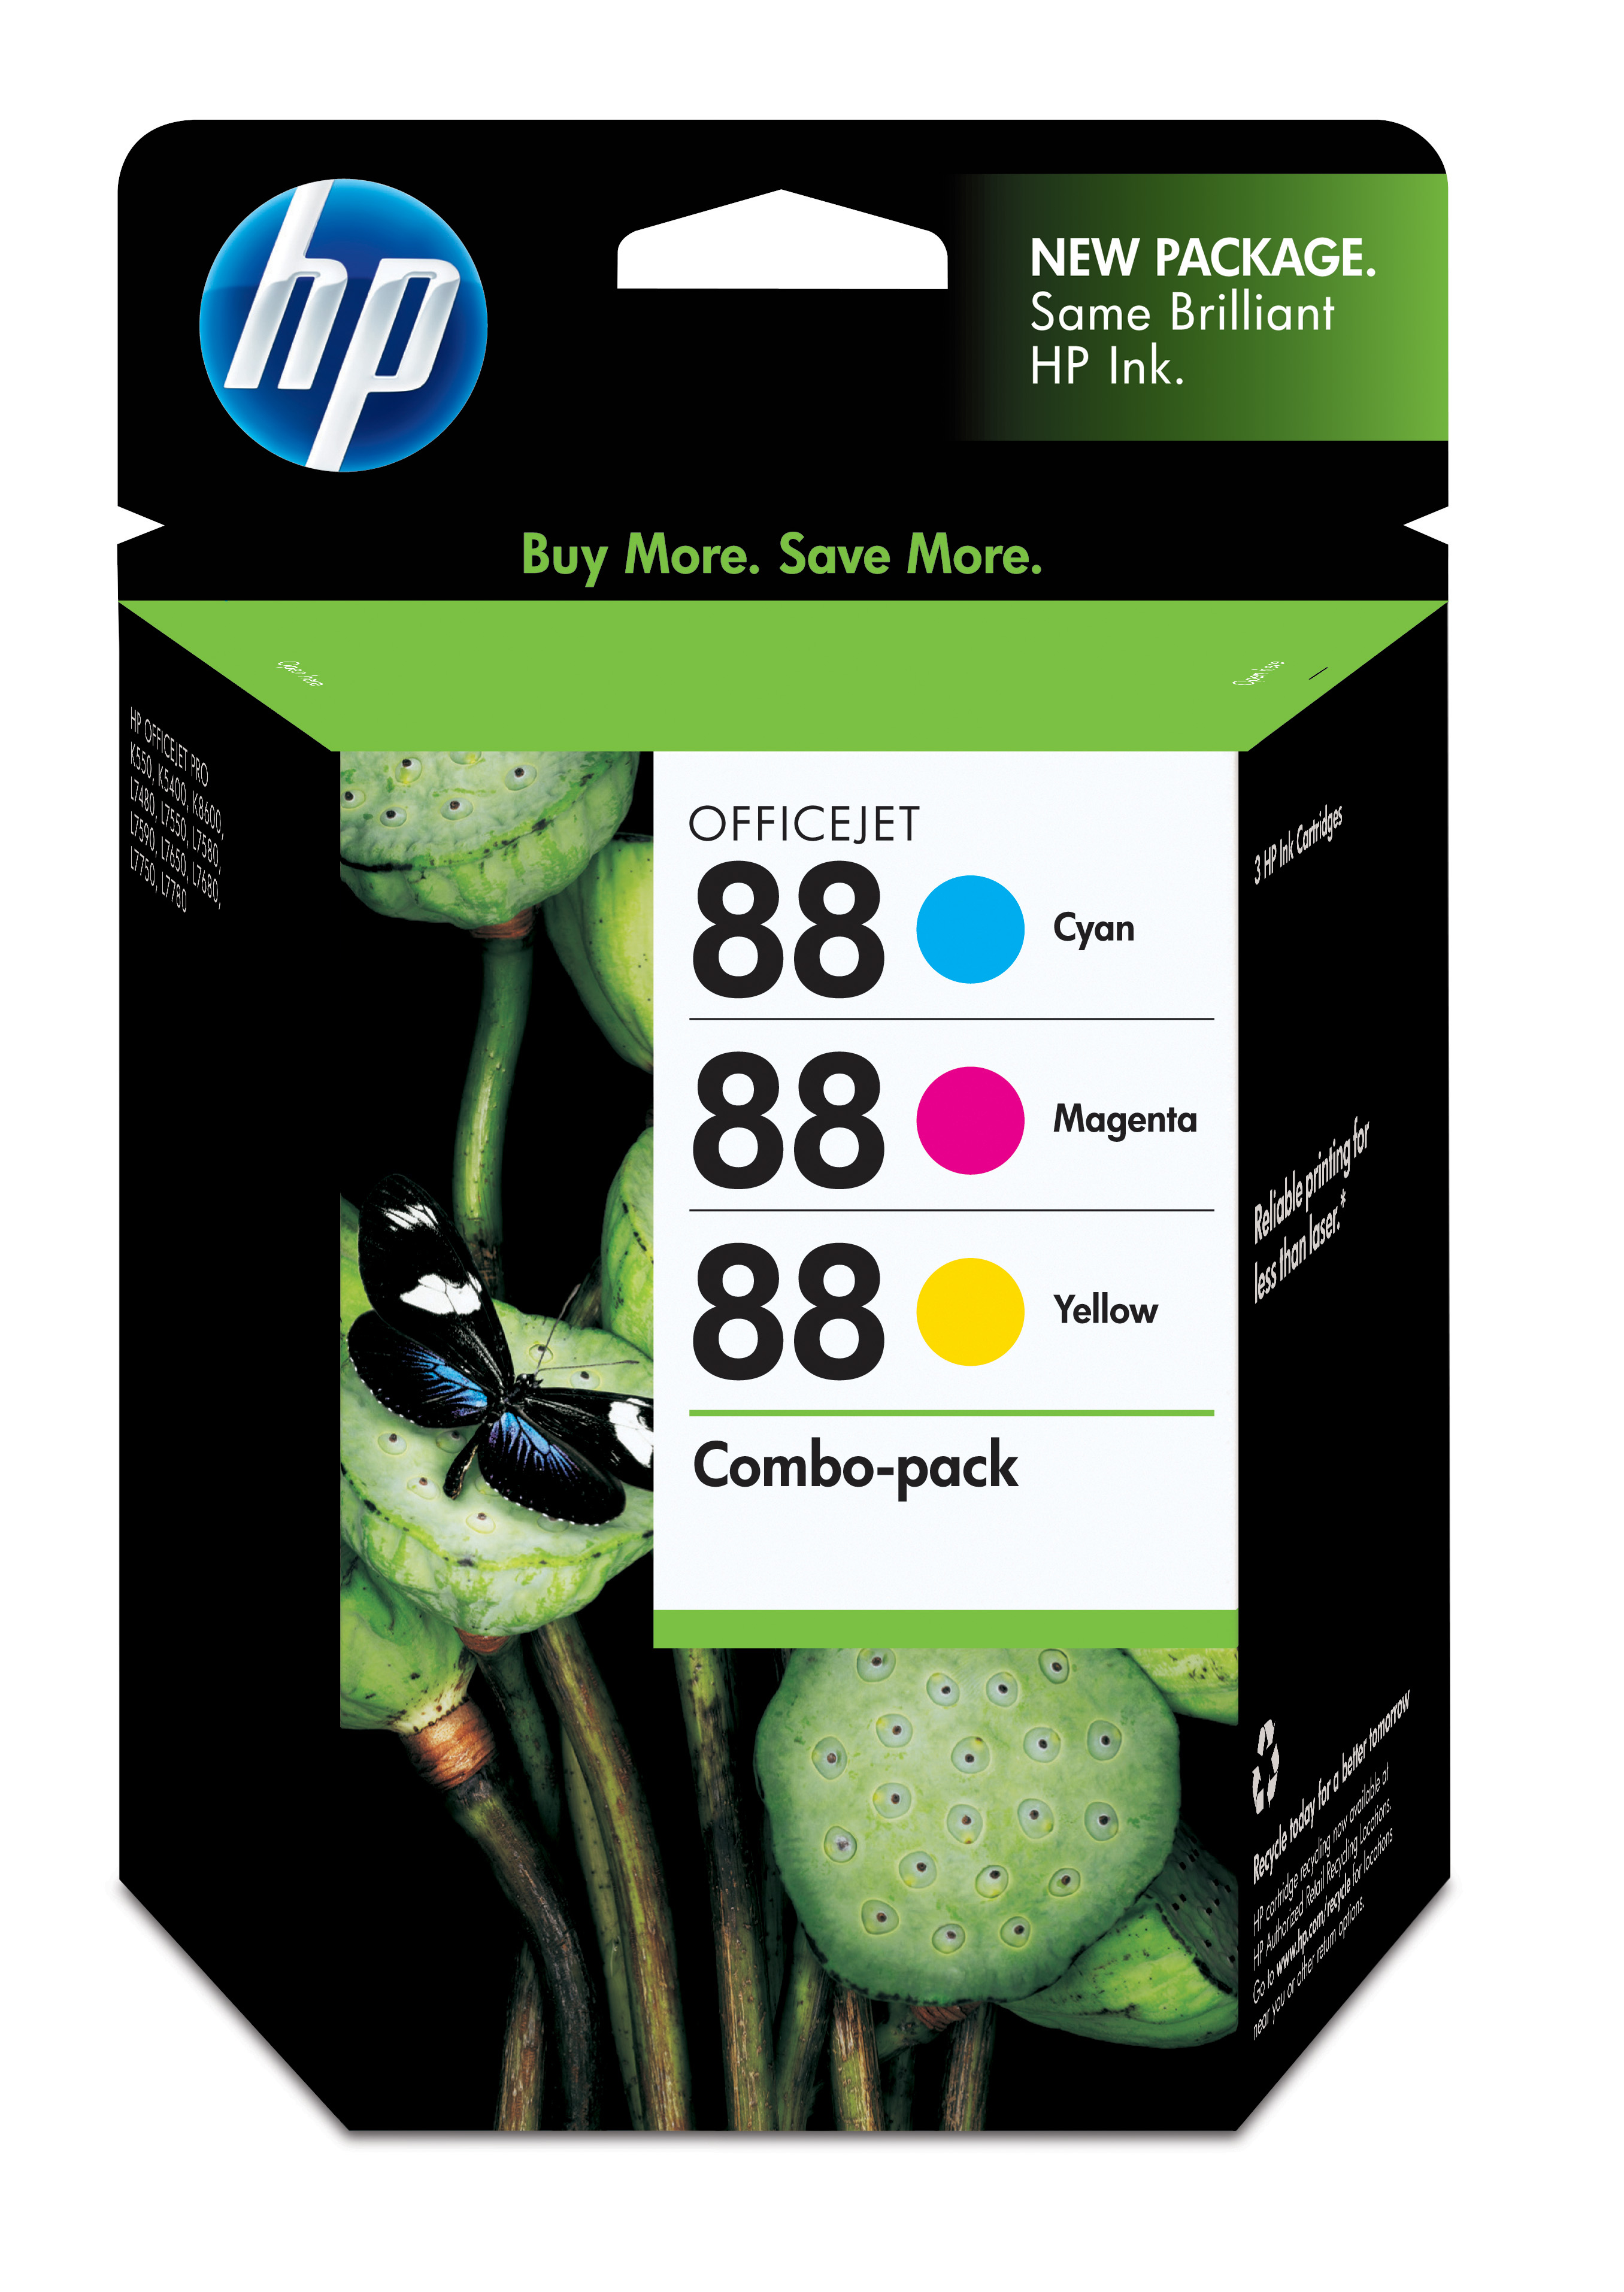 HP 88 Combo-pack Officejet Ink Cartridges Genuine HP Inkjet